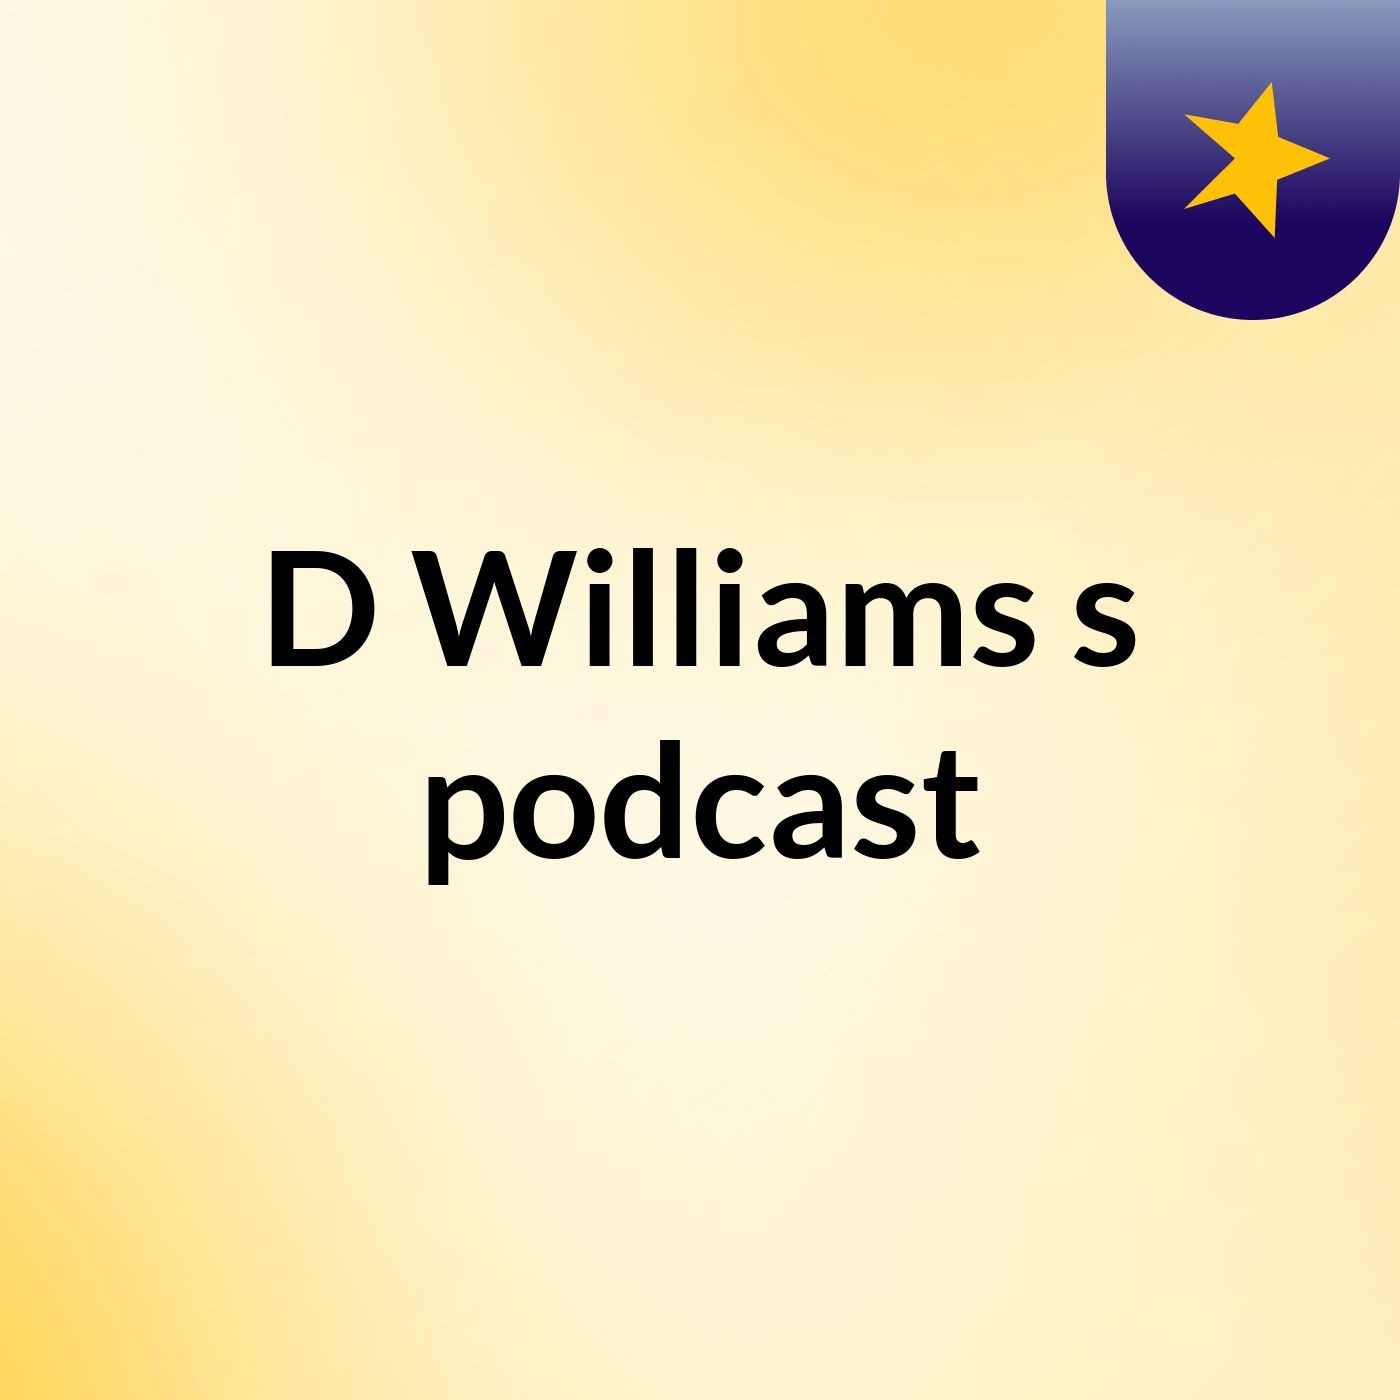 D Williams's podcast